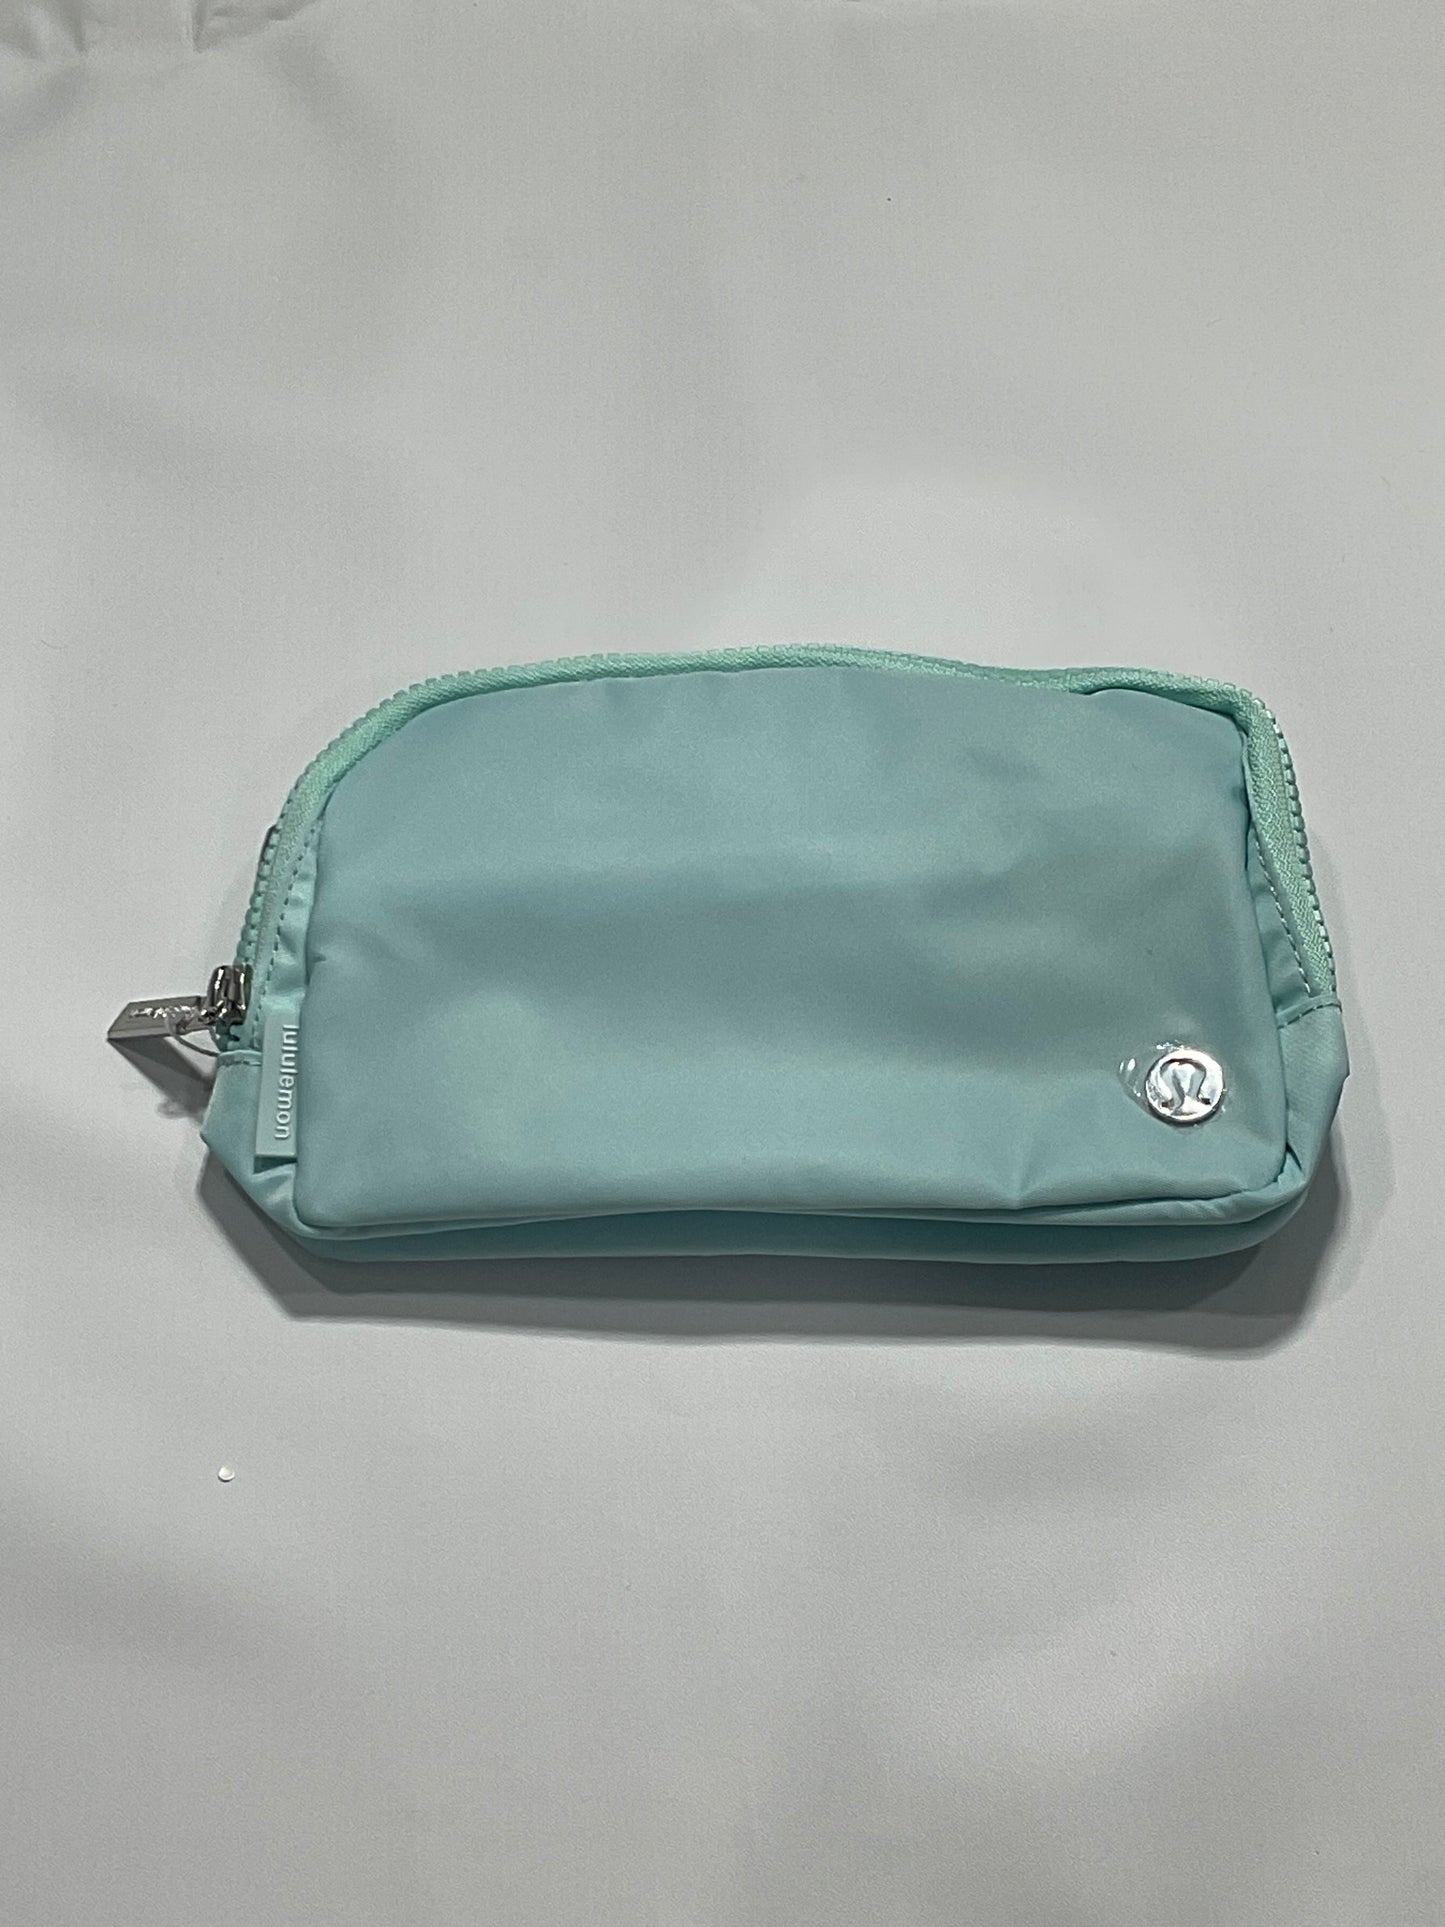 Lululemon Everywhere Belt Bag 1L - Mint Green